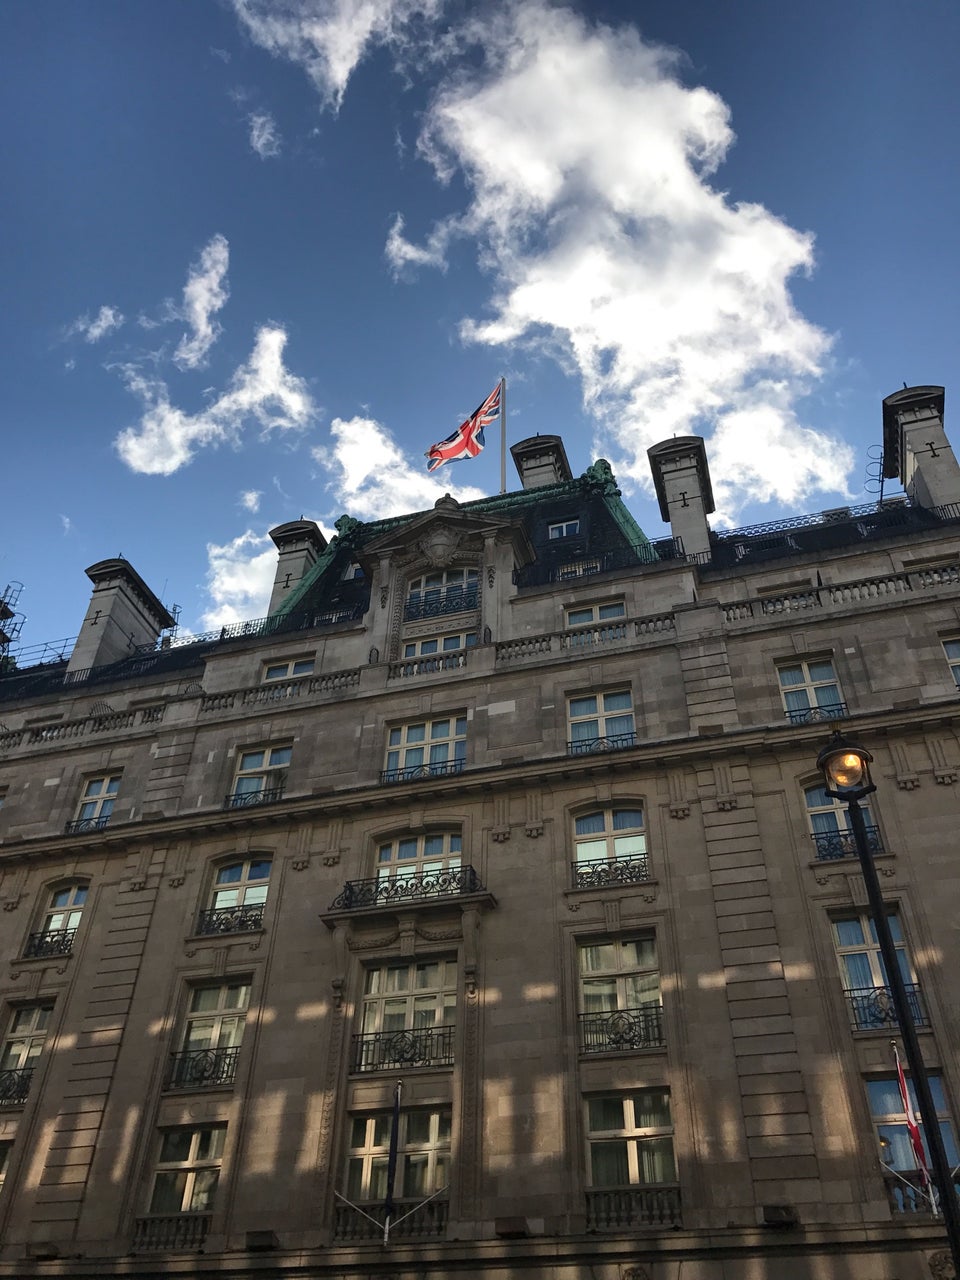 Photo of The Ritz London